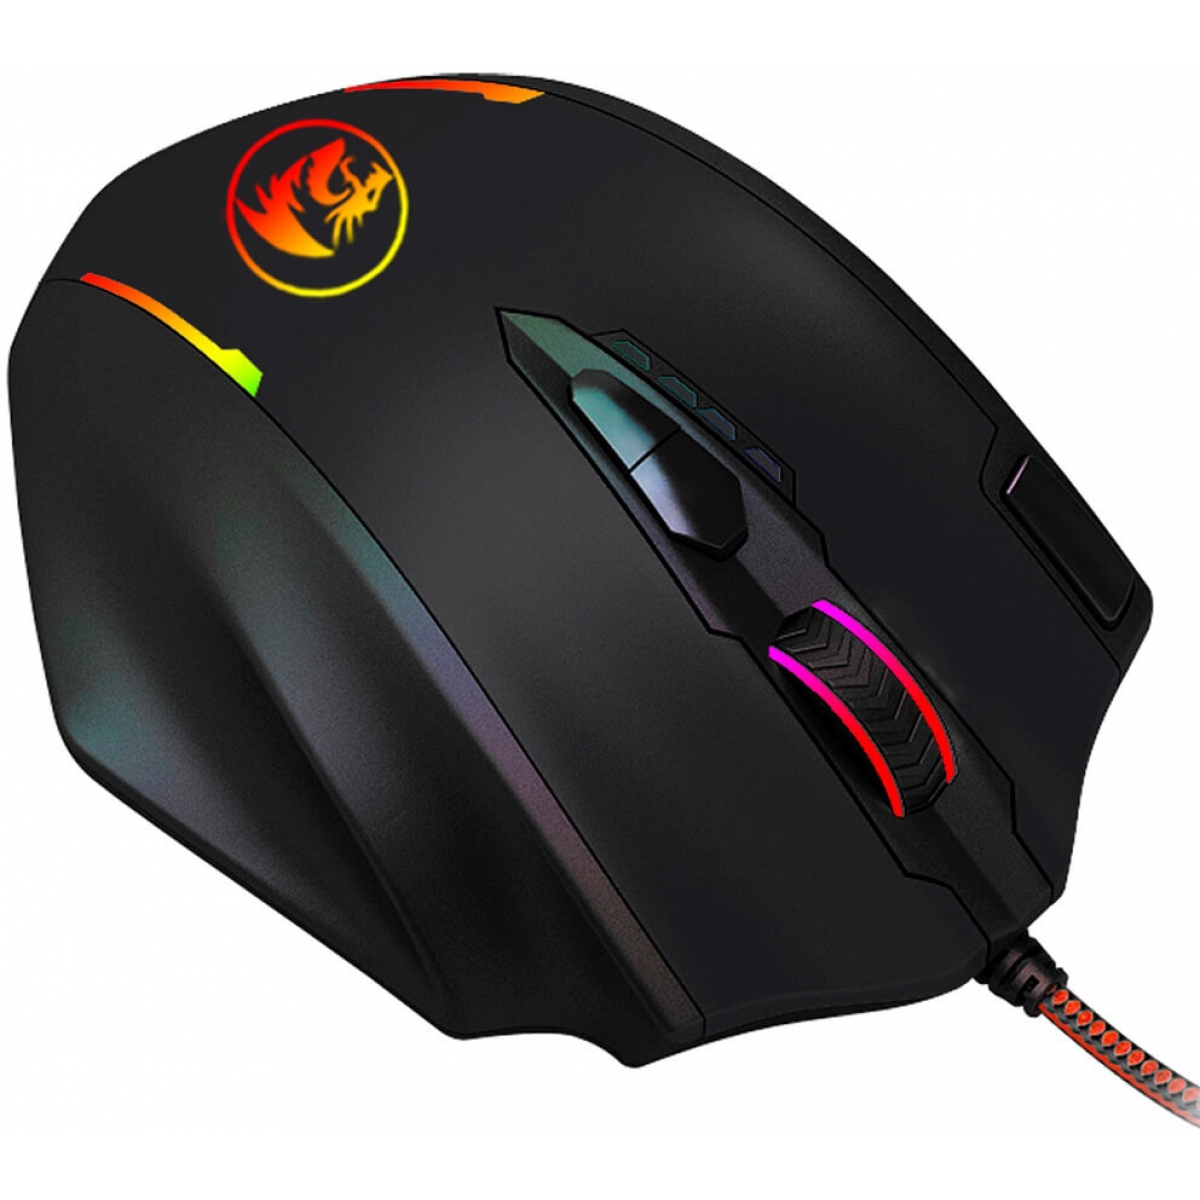 Mouse Gamer Redragon Impact M908 RGB, 12400 DPI, 12 botões programáveis, Black